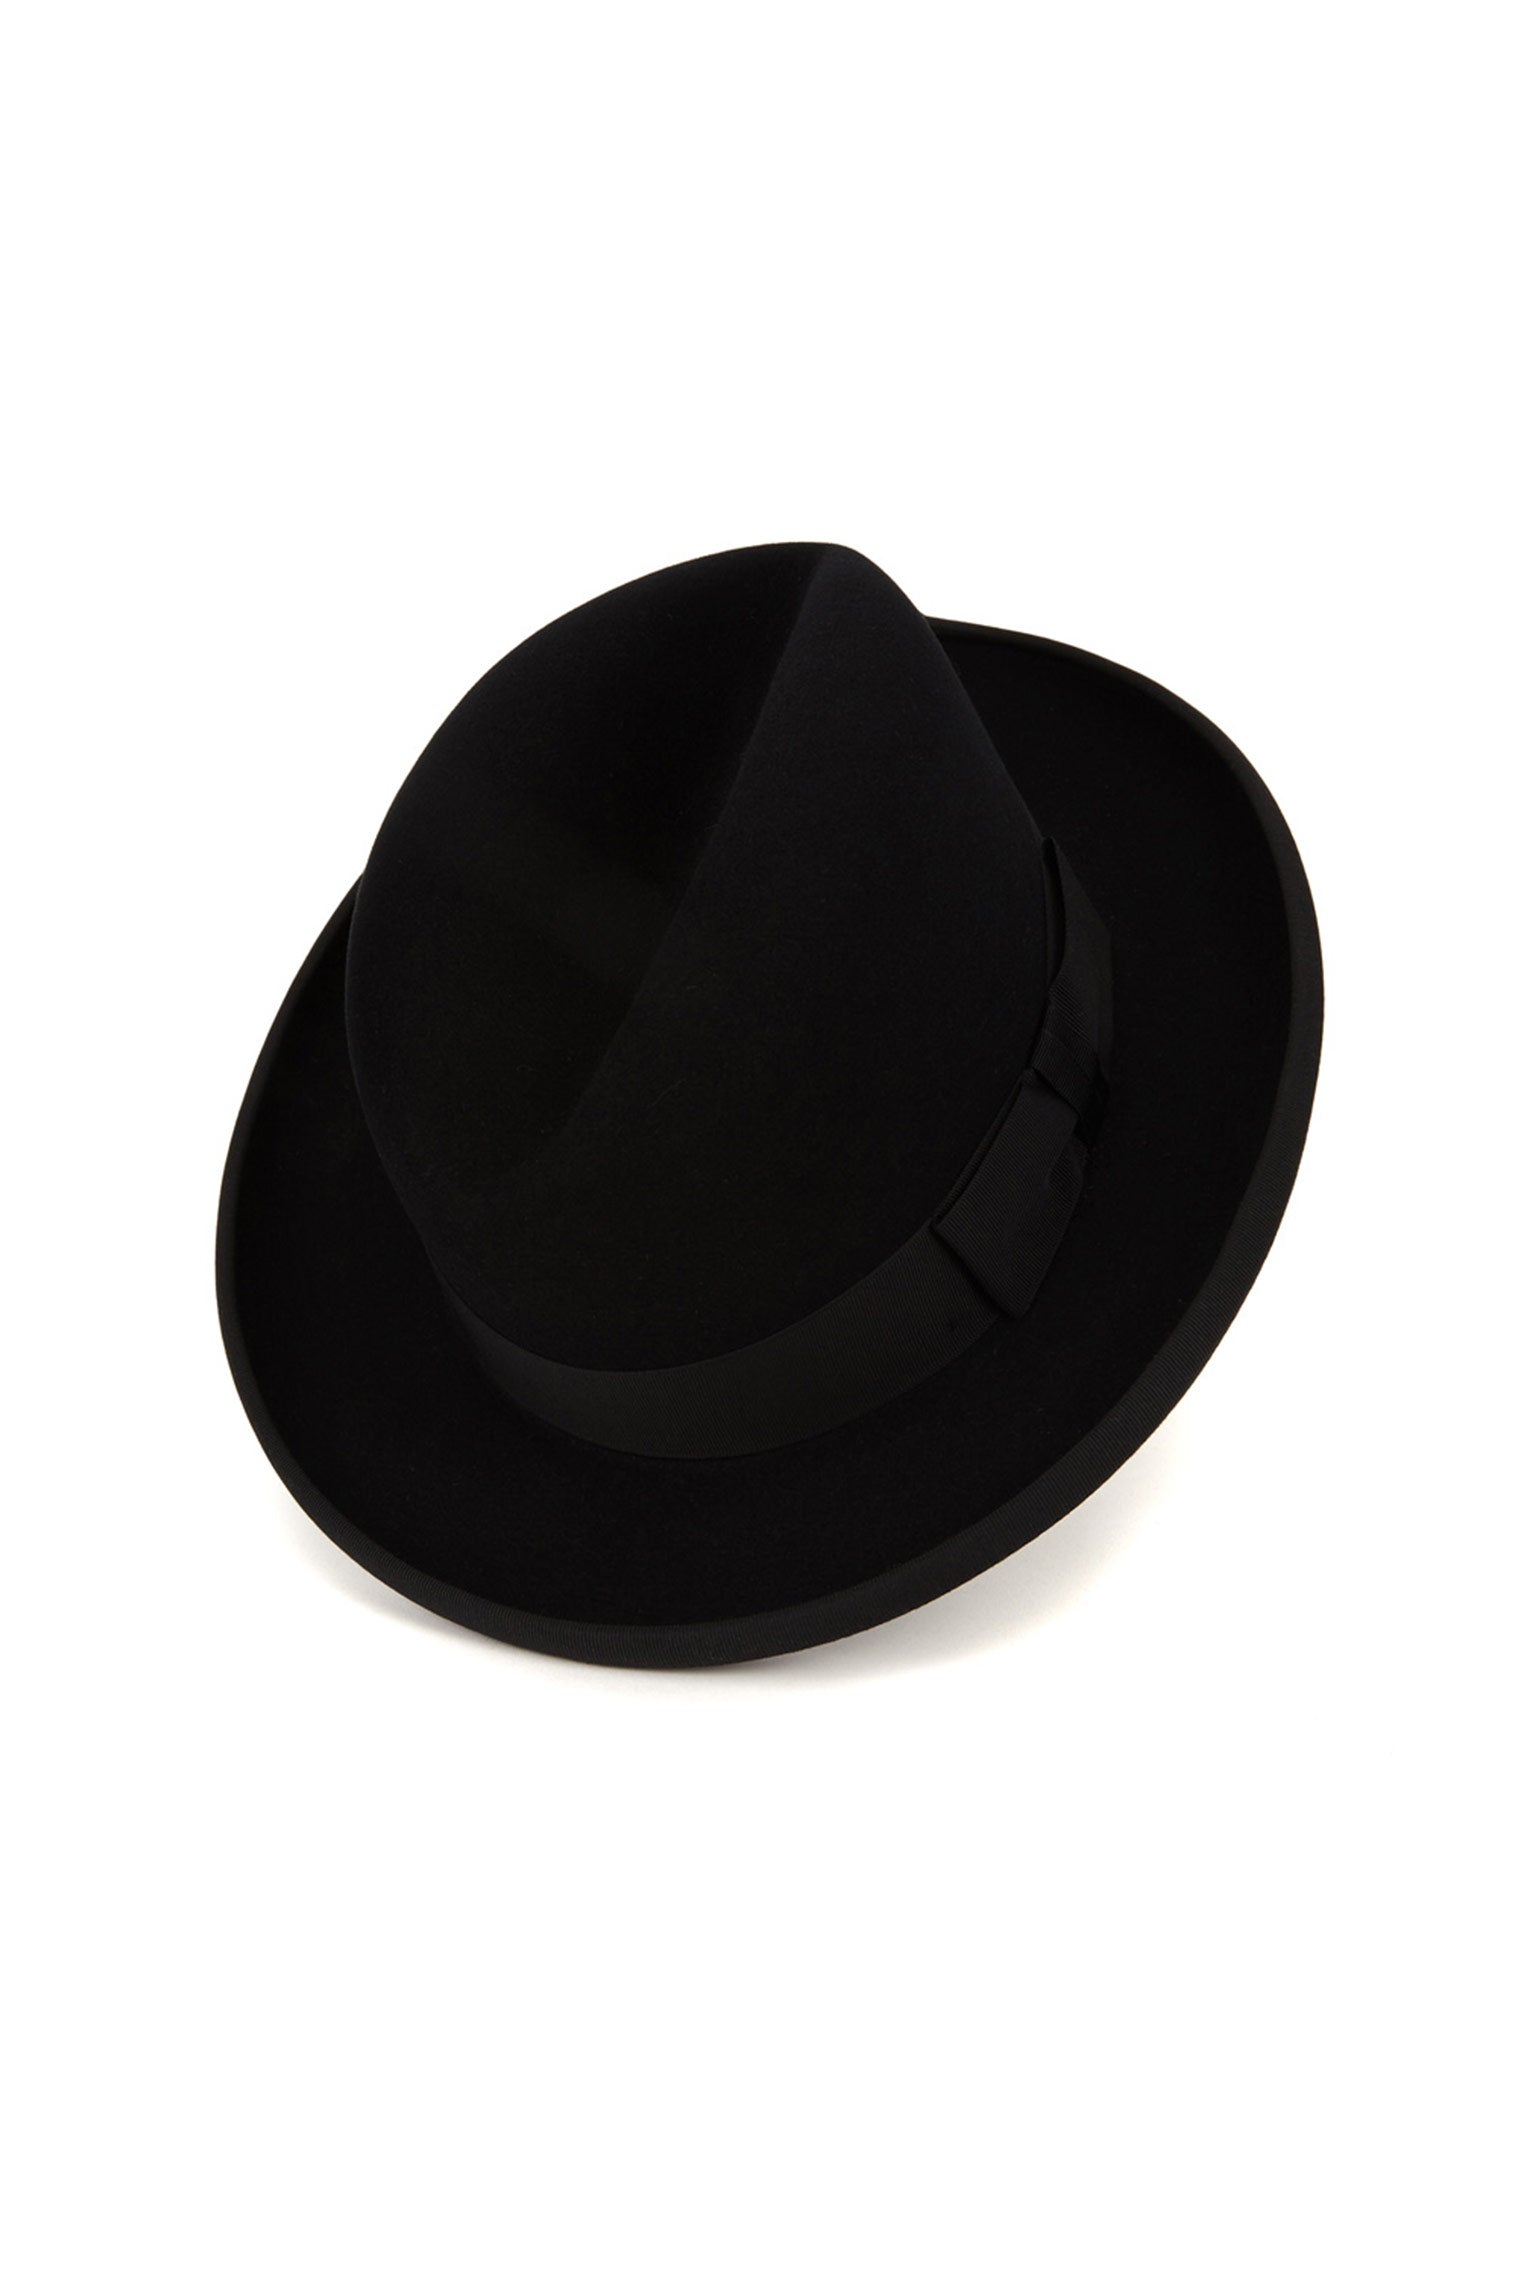 Eden Homburg - Hats for Square Face Shapes - Lock & Co. Hatters London UK